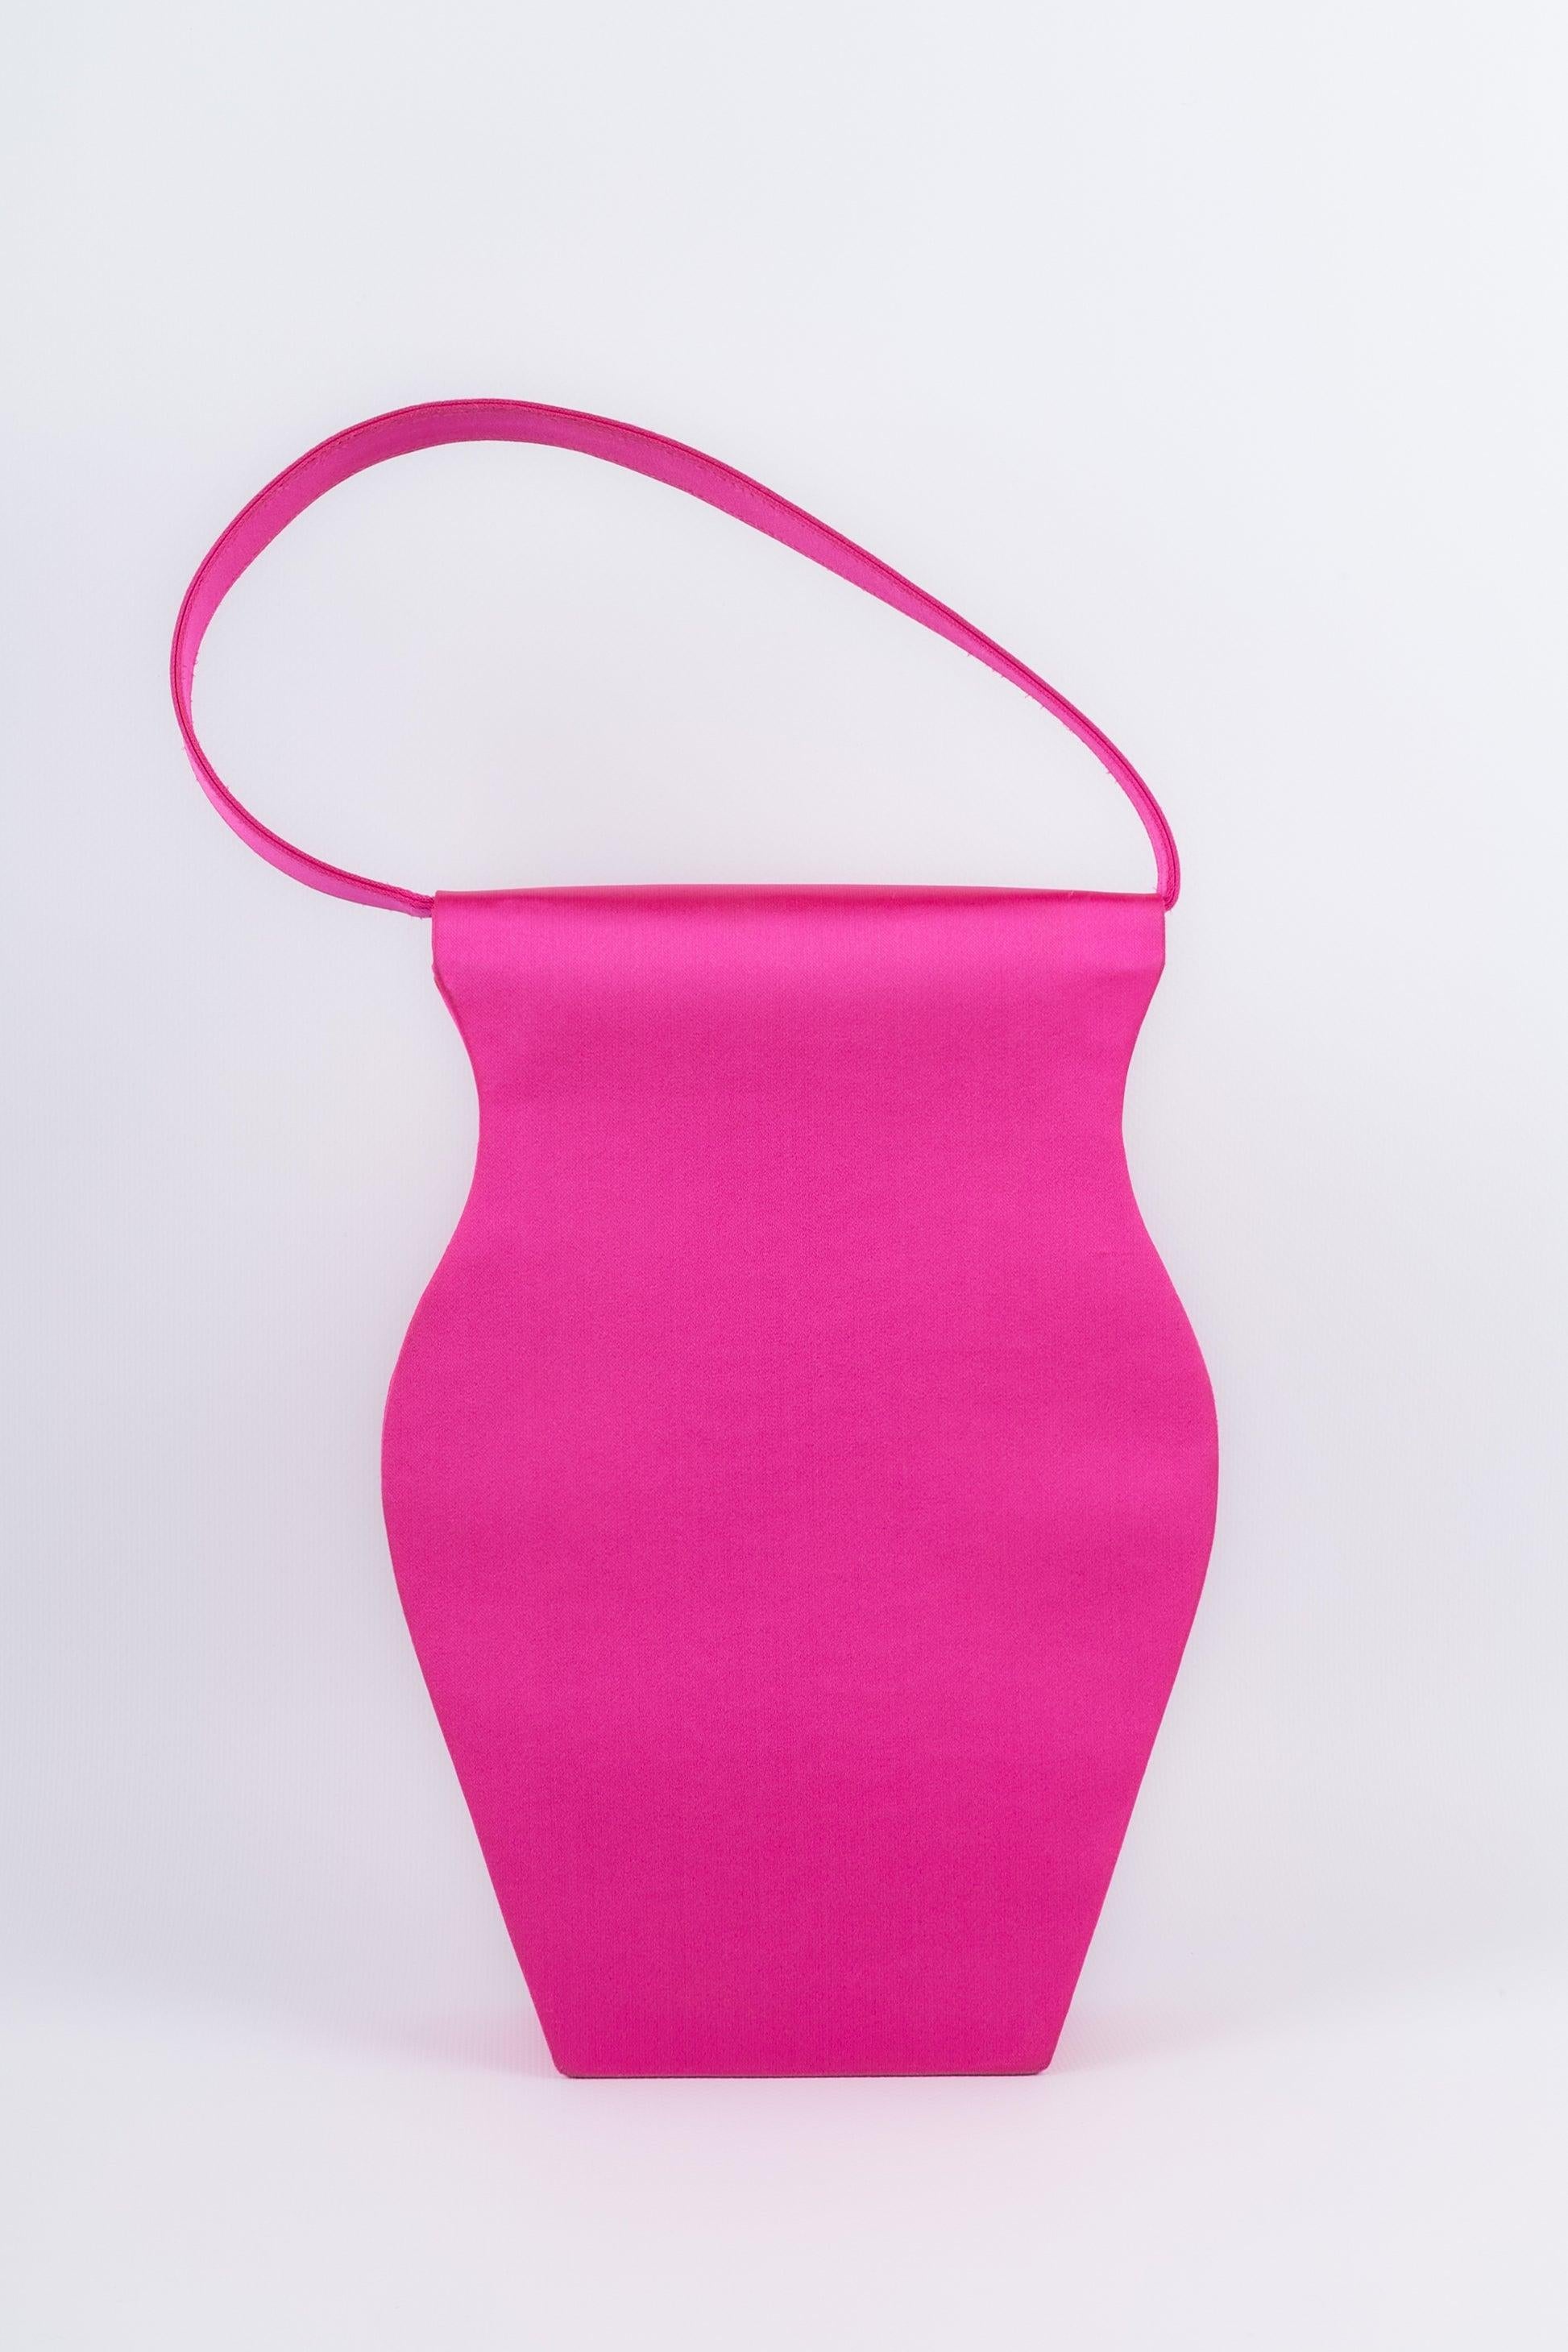 Christian Lacroix Pink Silk Bag In Good Condition For Sale In SAINT-OUEN-SUR-SEINE, FR